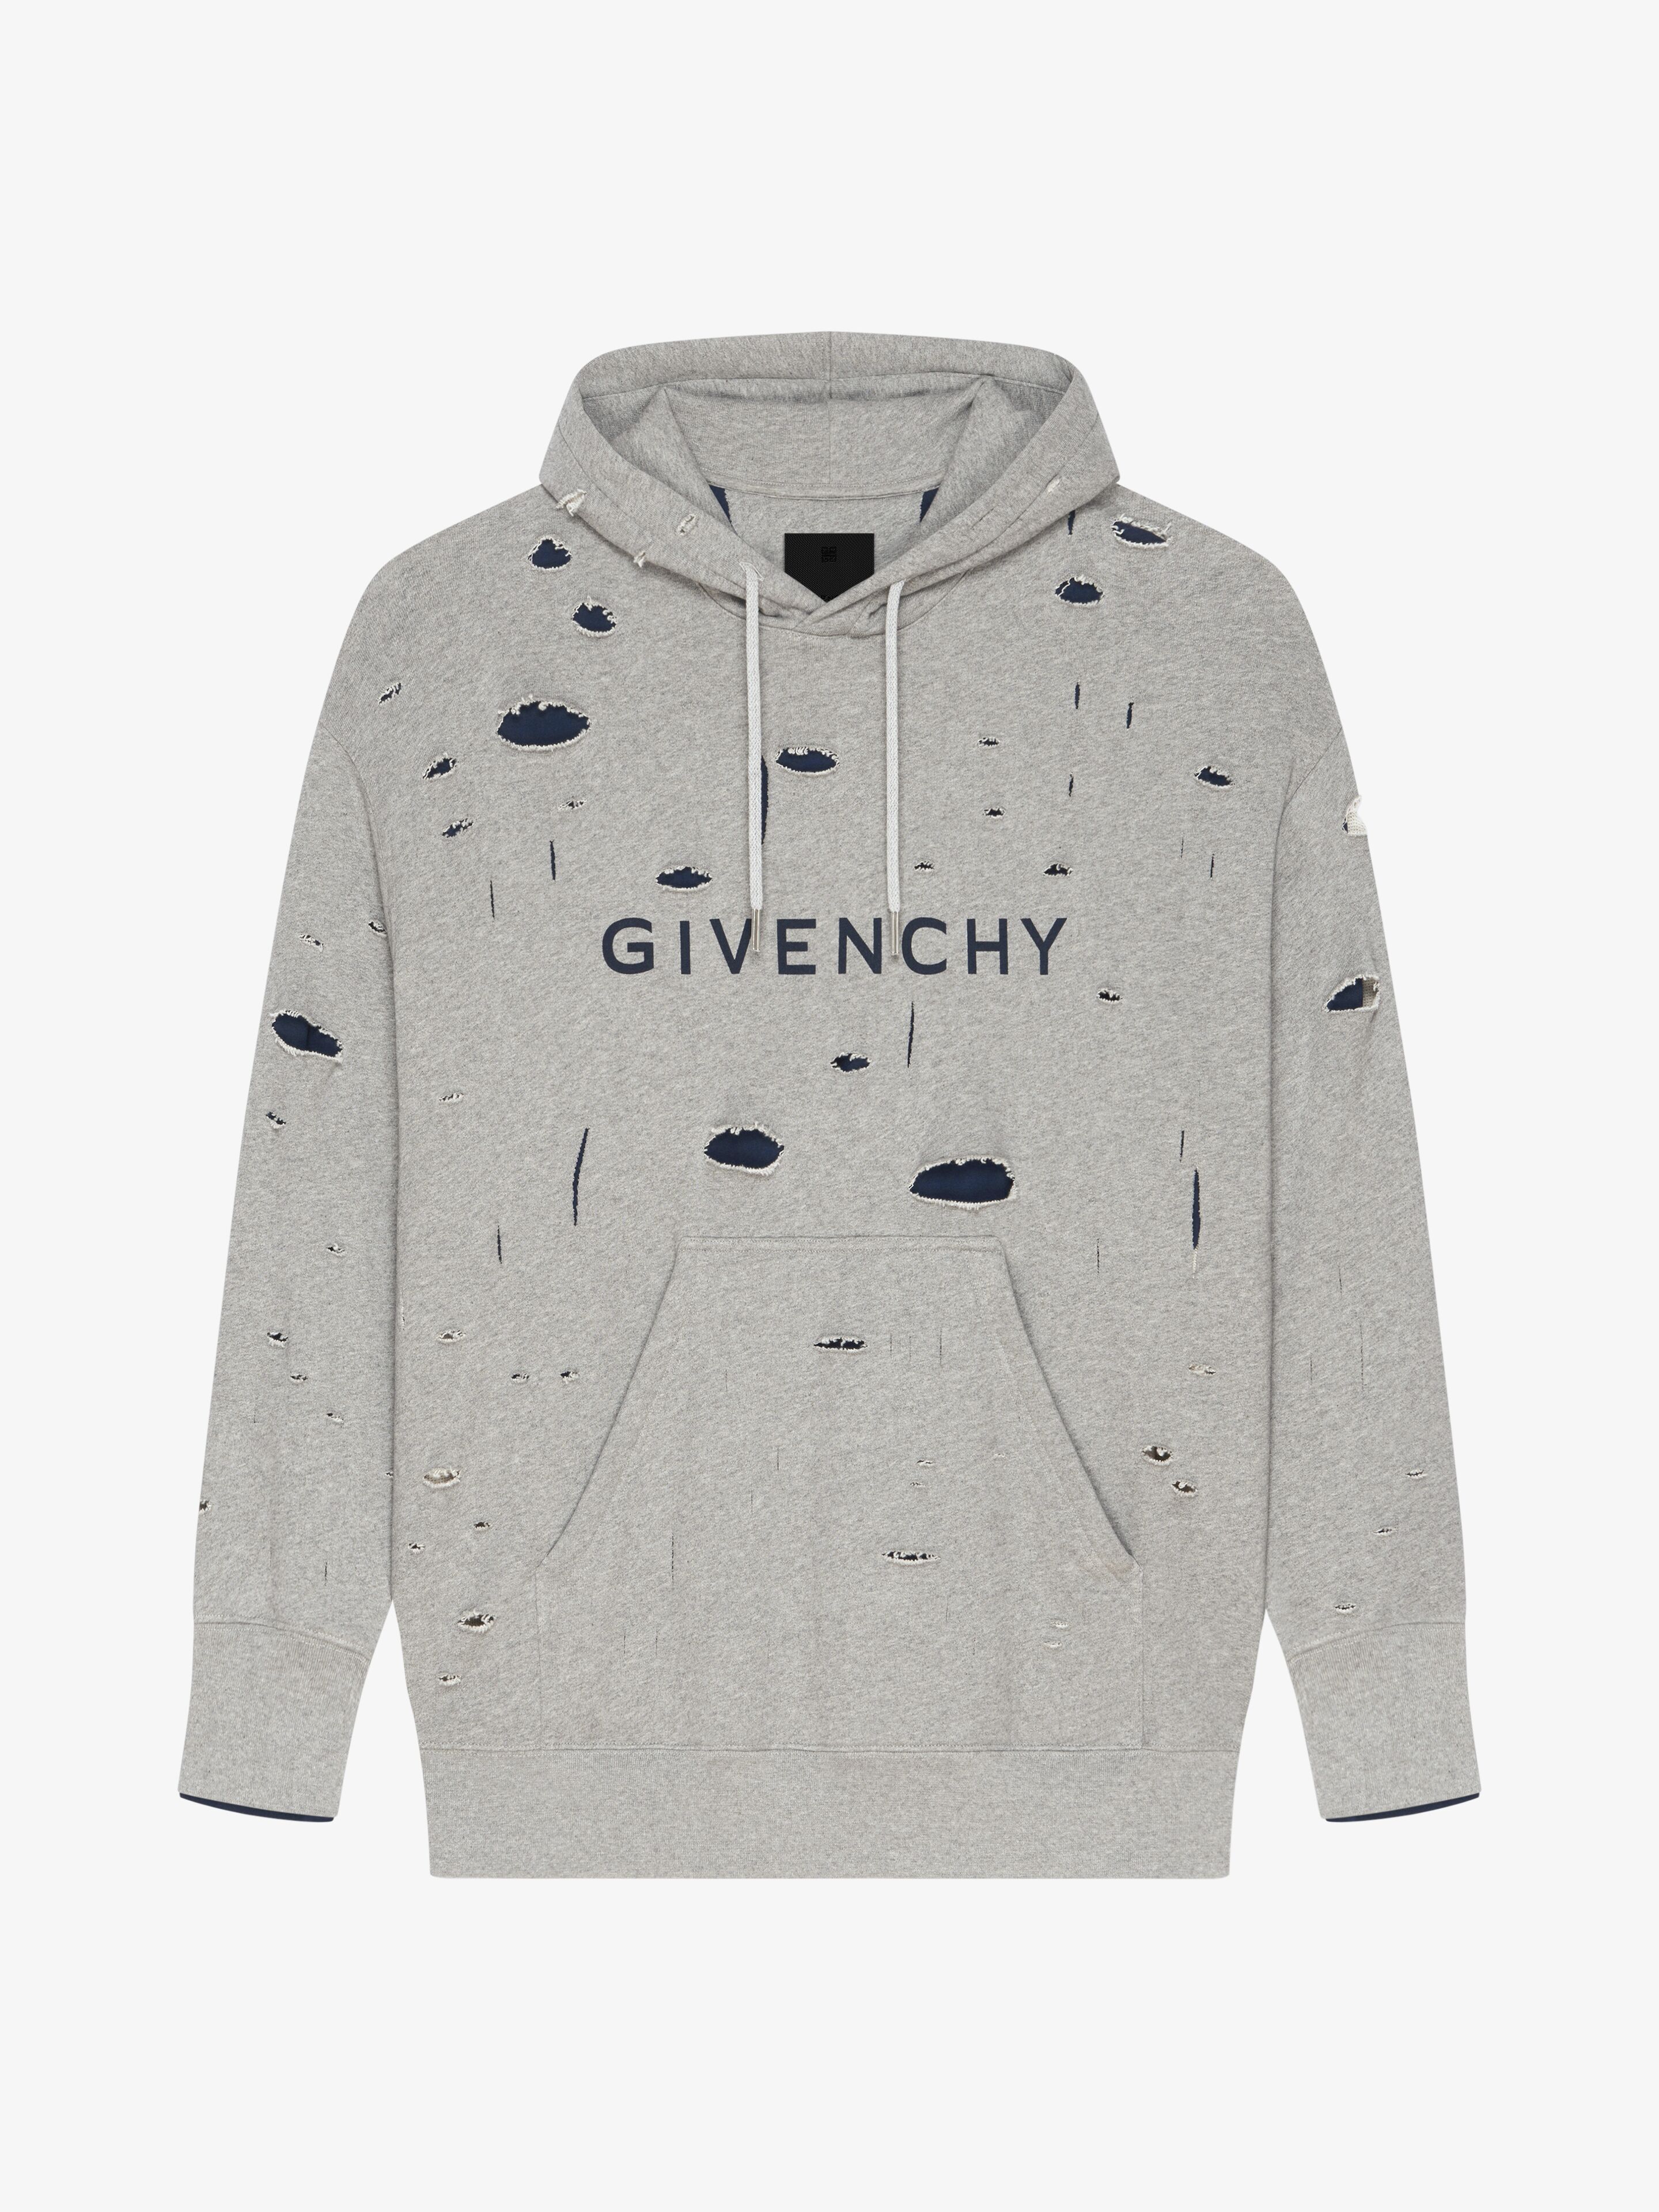 Luxury Sweatshirts & Hoodies Collection for Men